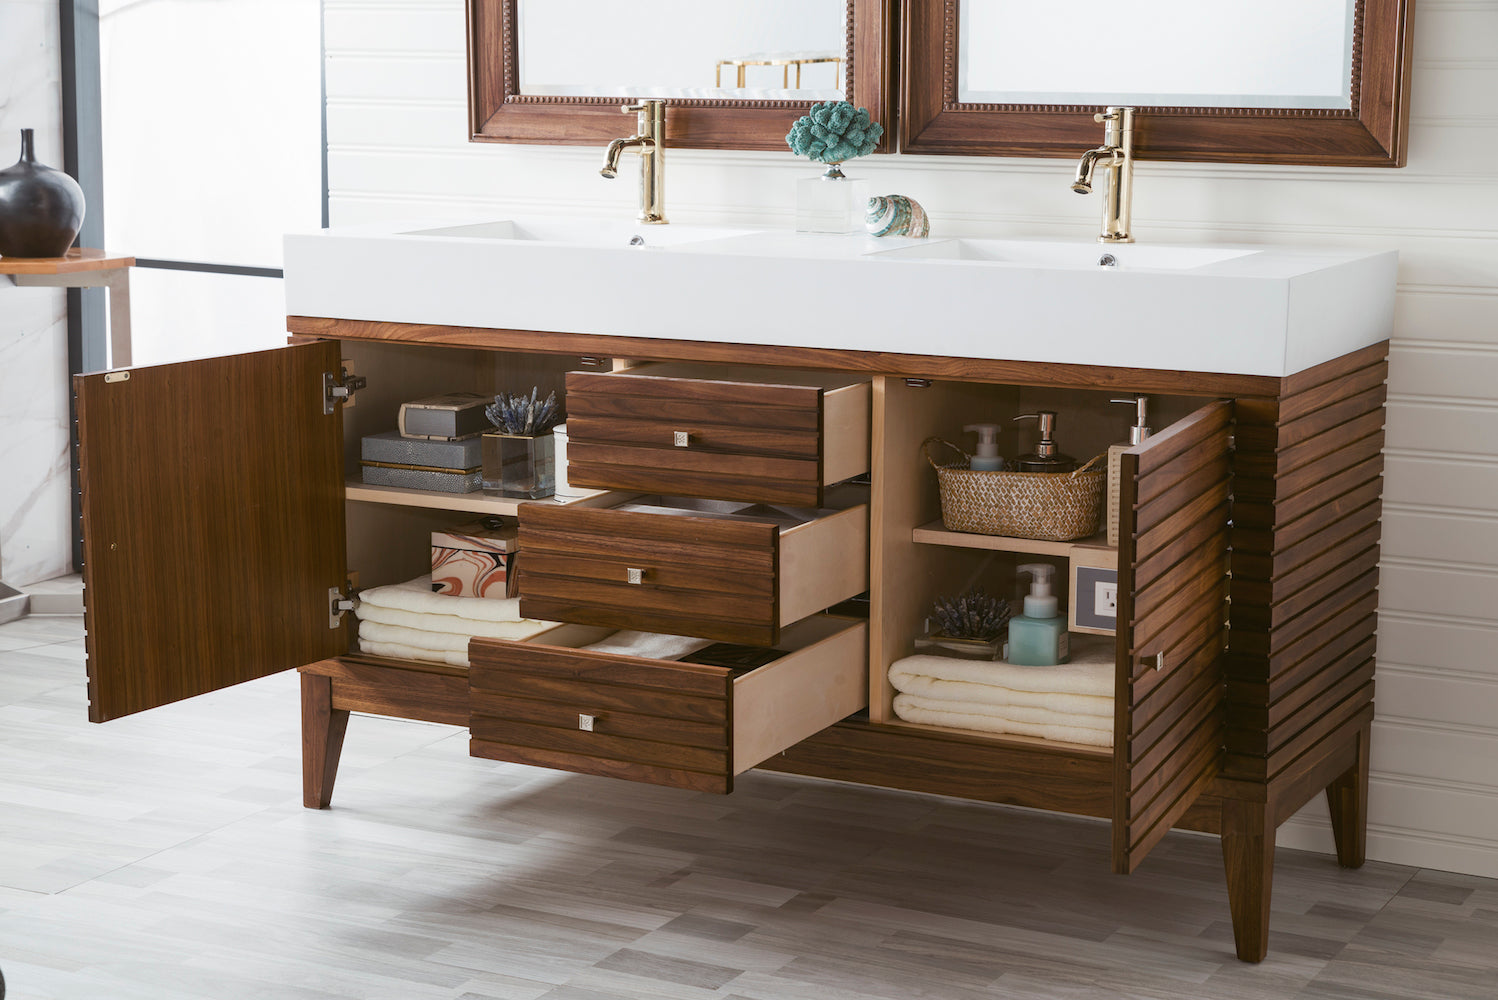 59" Linear Double Sink Bathroom Vanity, Mid Century Walnut